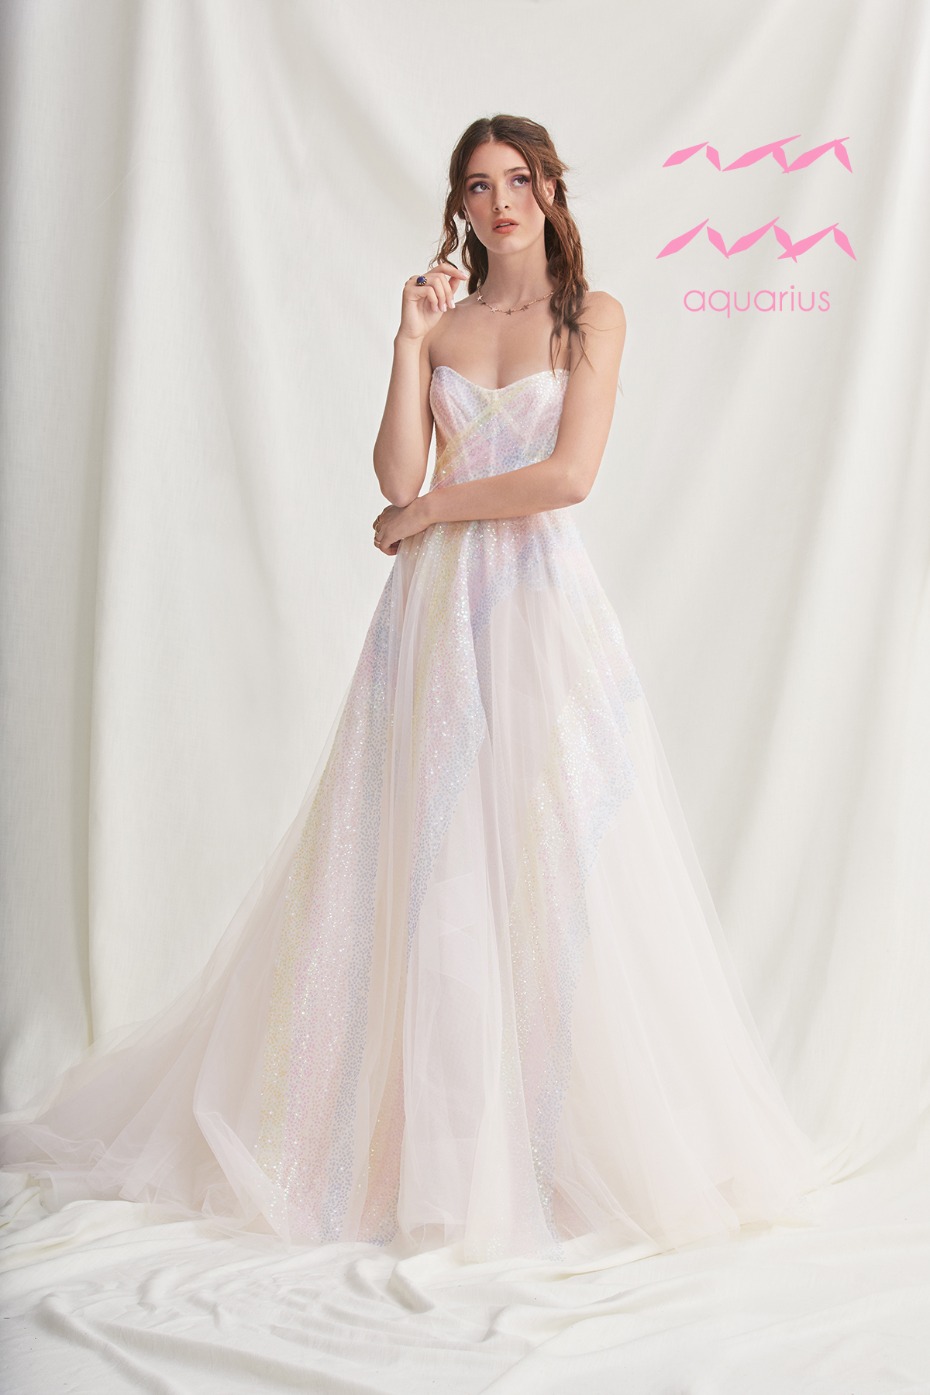 rainbow sparkle wedding dress for the Aquarius Zodiac